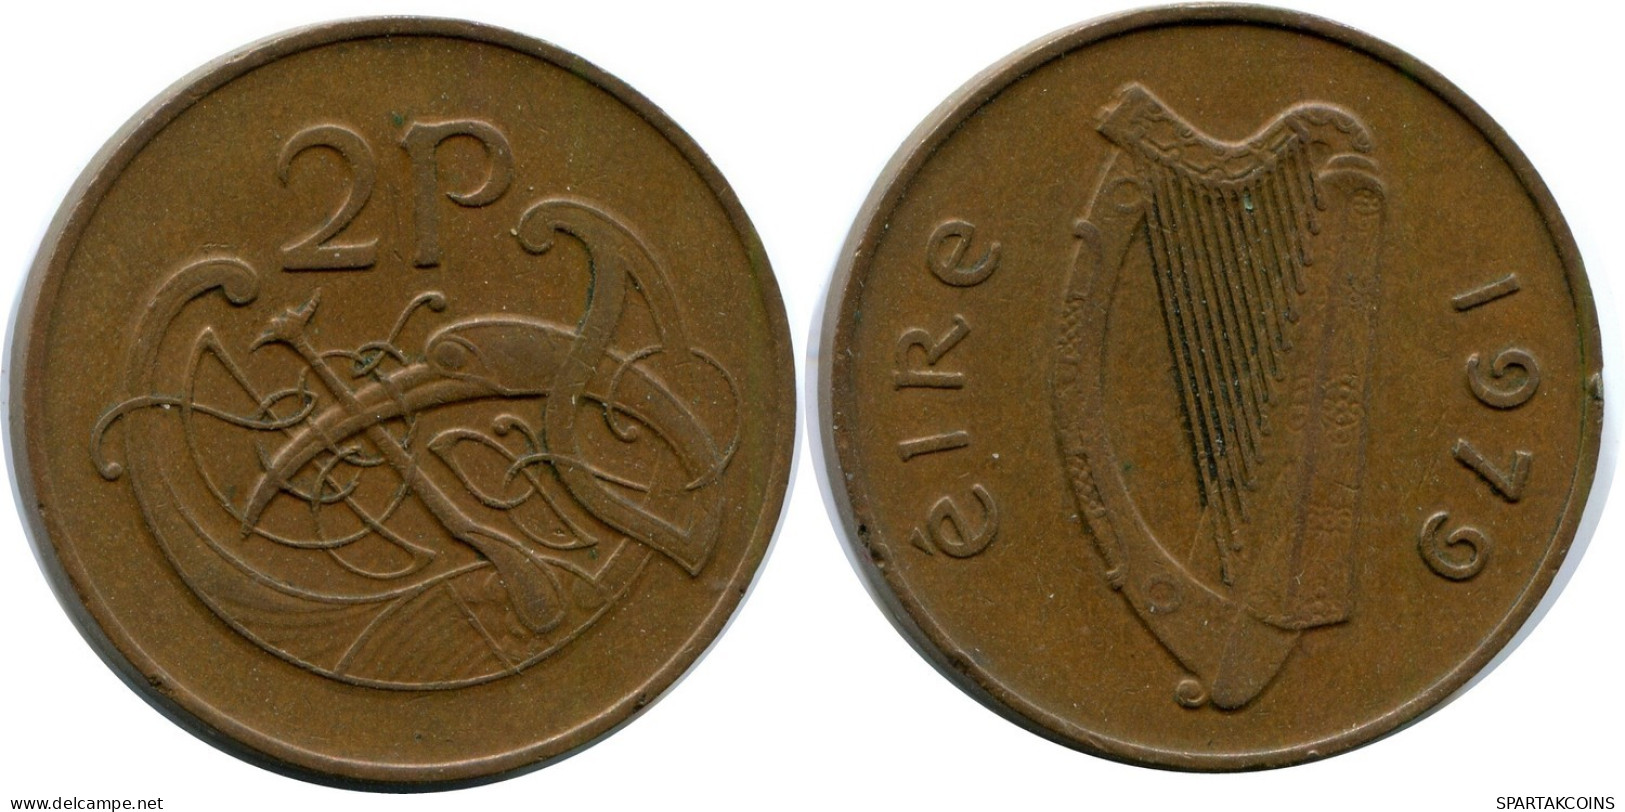 2 PENCE 1979 IRELAND Coin #AY674.U.A - Ireland